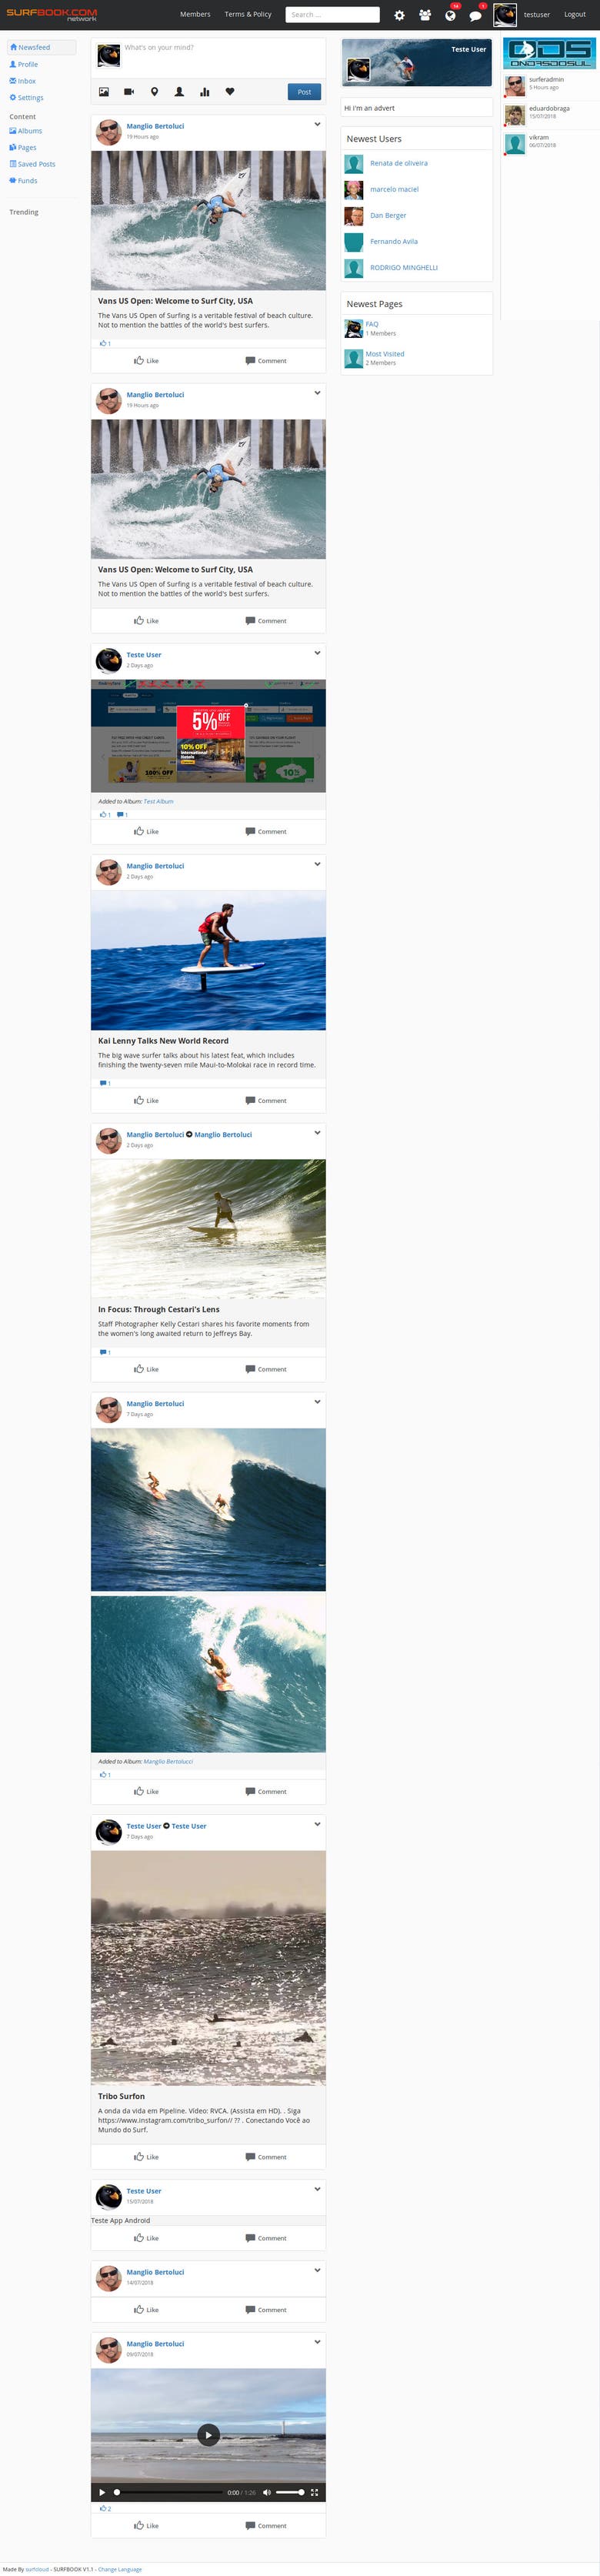 Surf Book Social Network Platform similar with Facebook